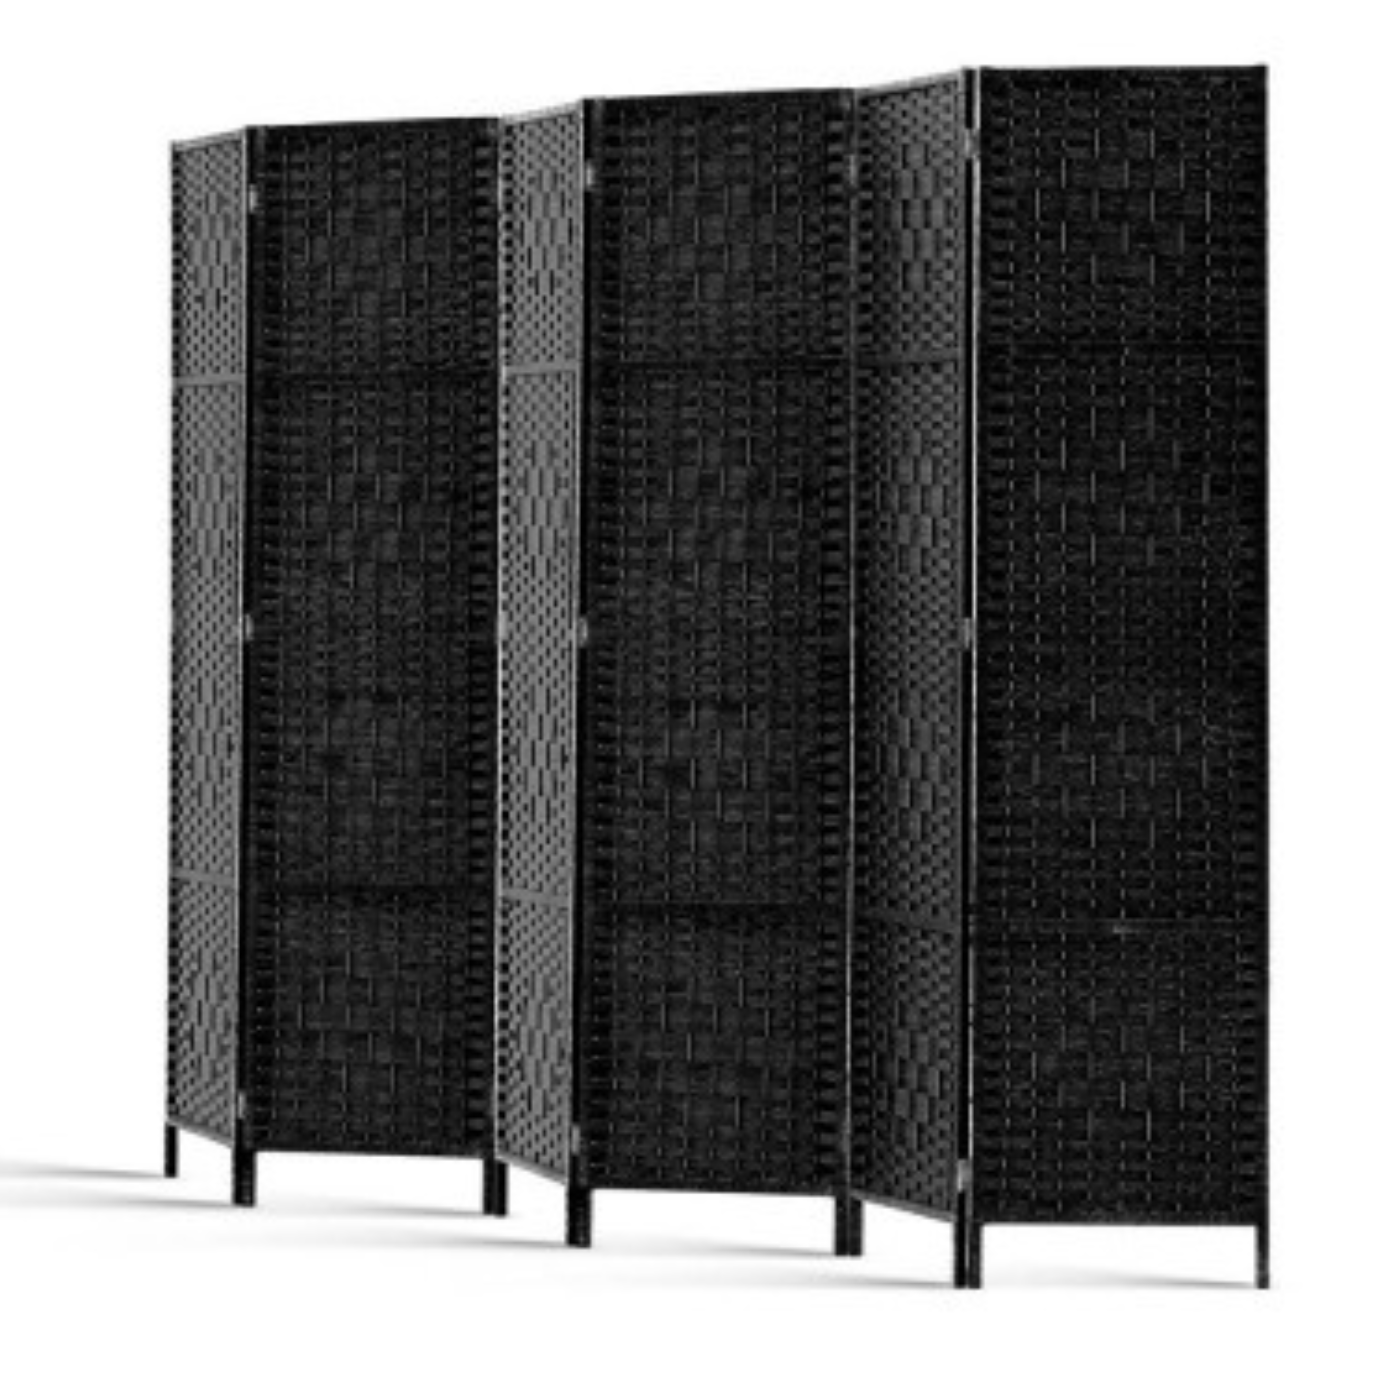 Six Panel Black Rattan Wooden Room Divider